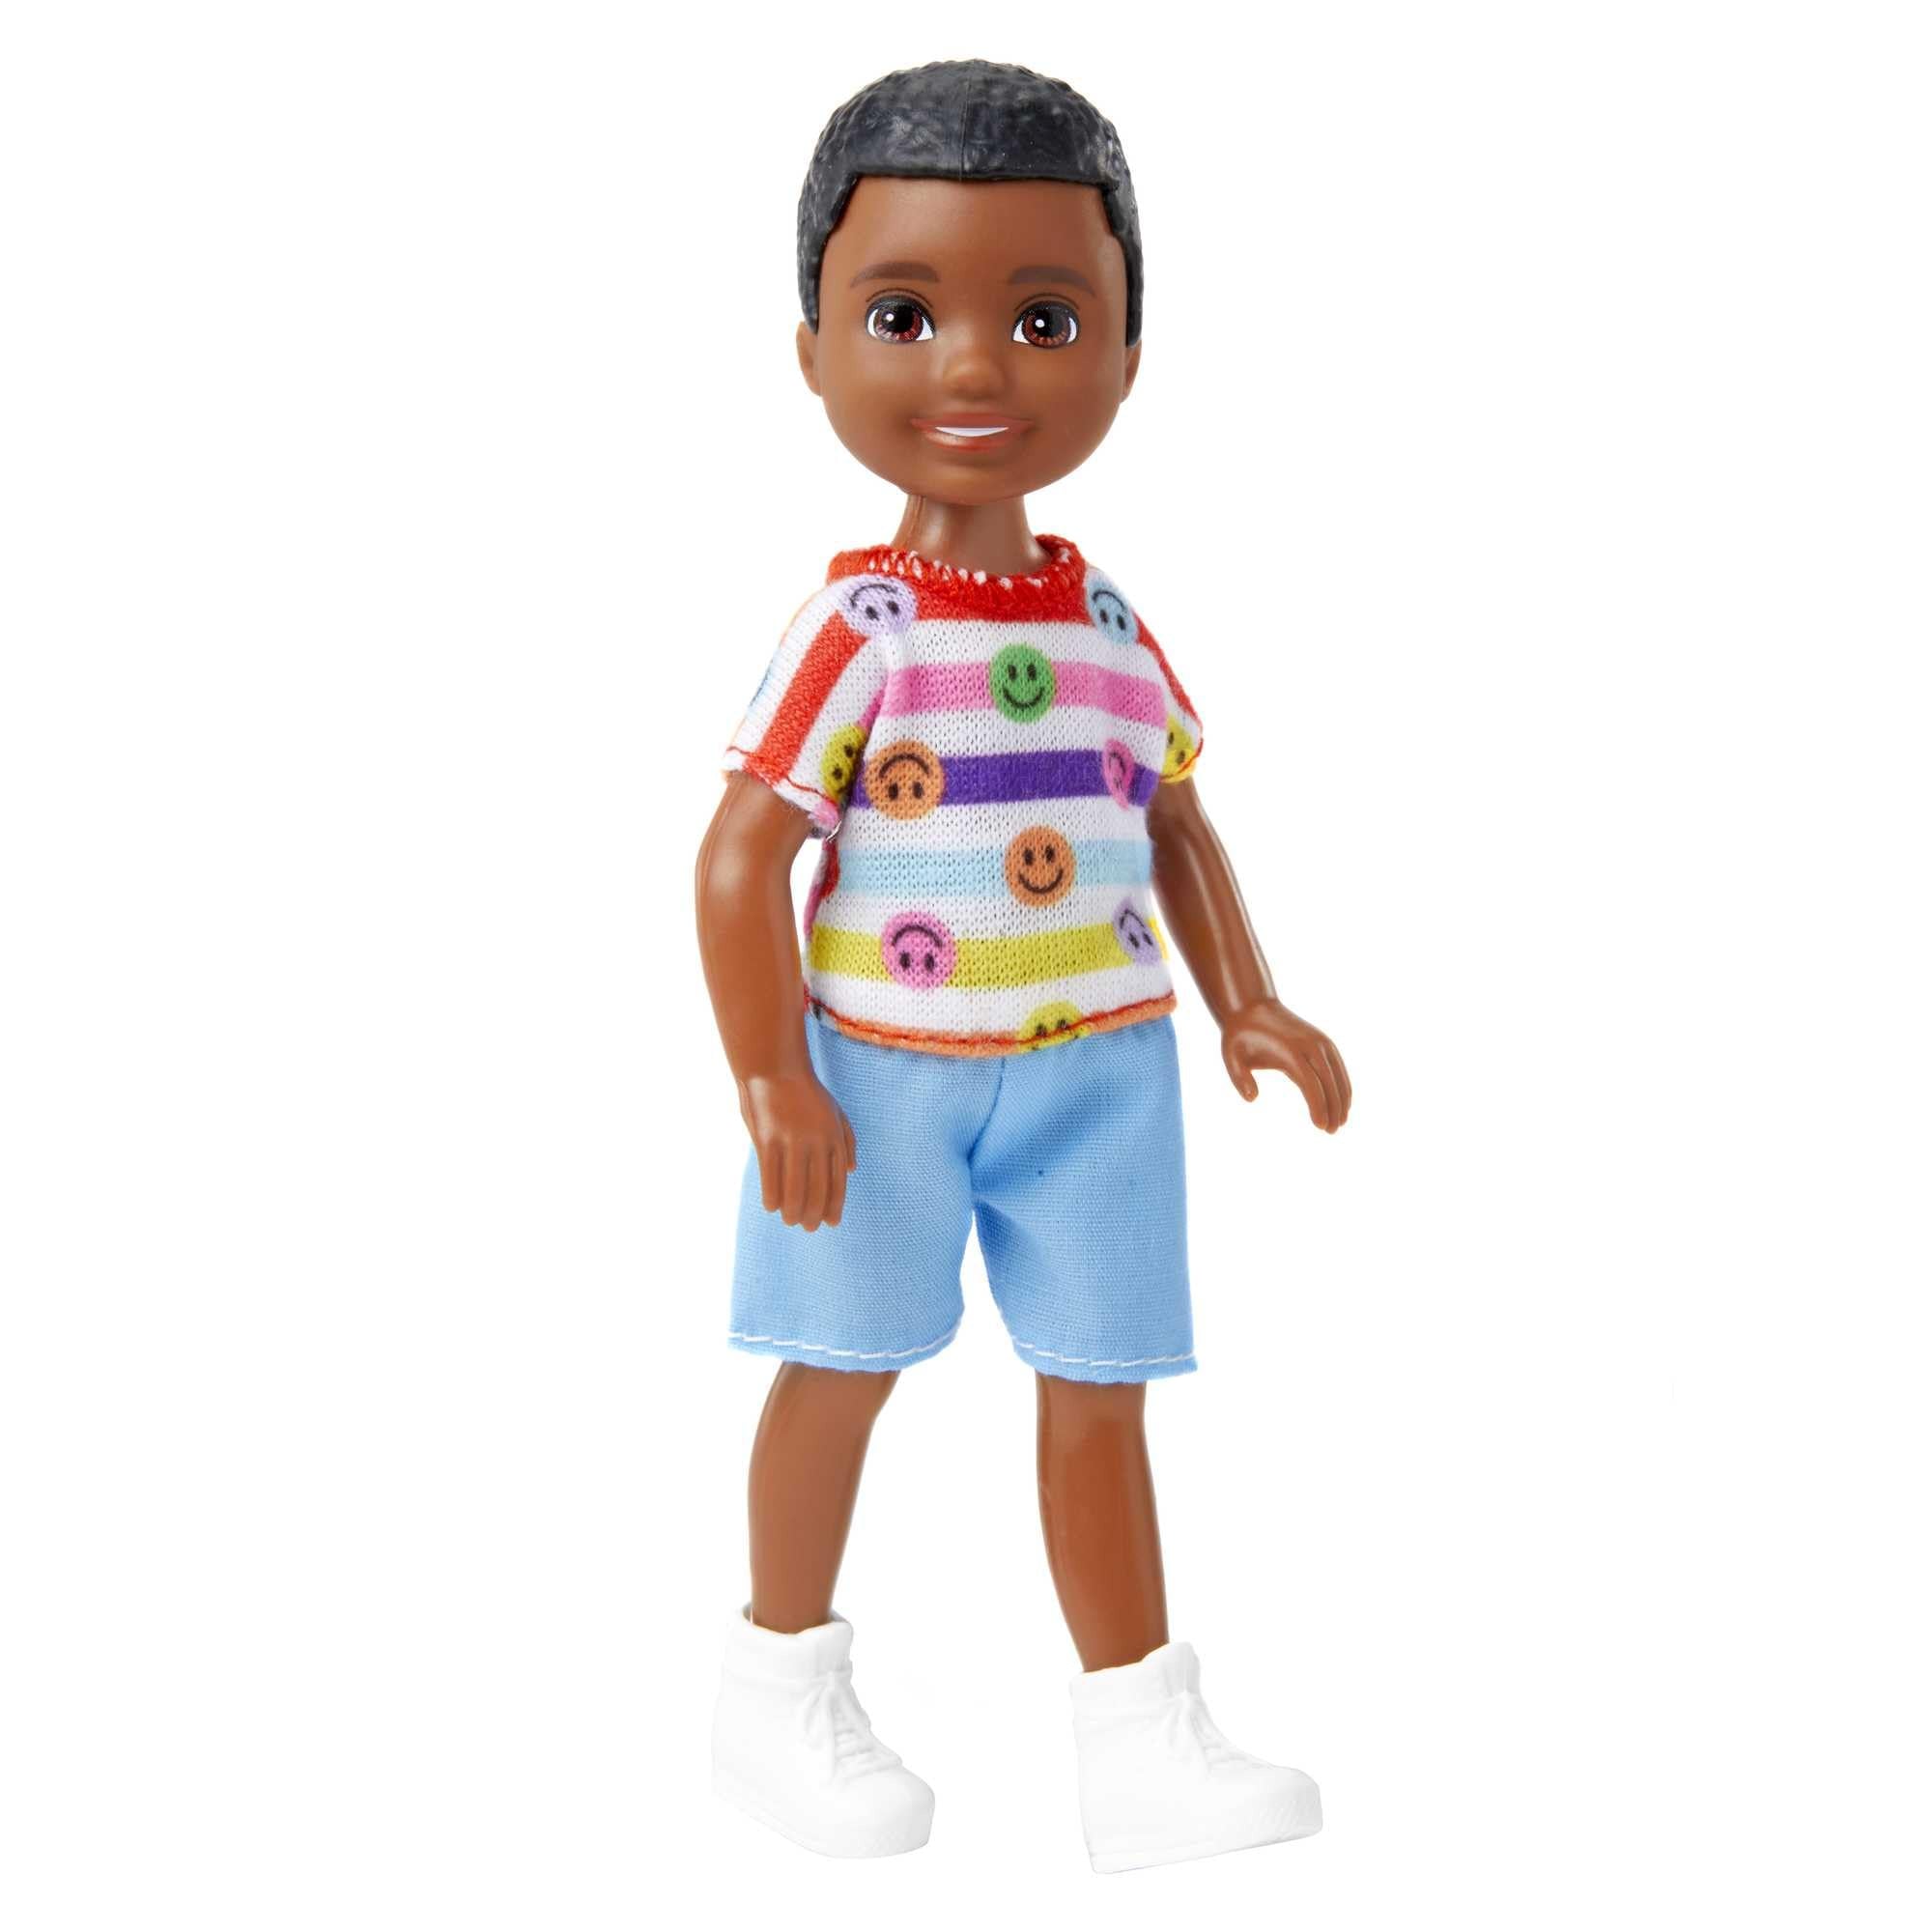 Barbie Chelsea Boy Doll With Black Hair